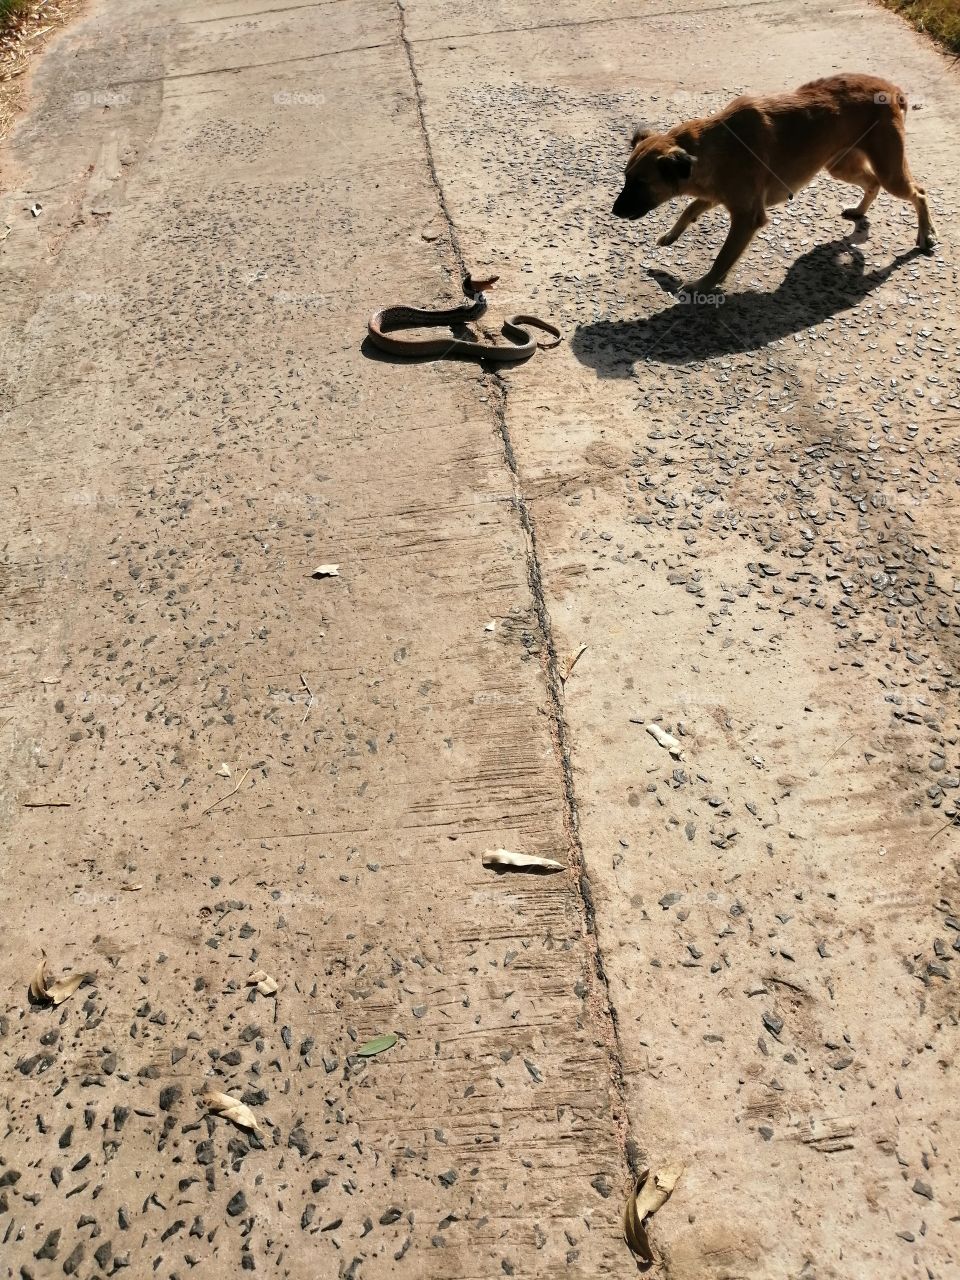 Snake dog with cobra